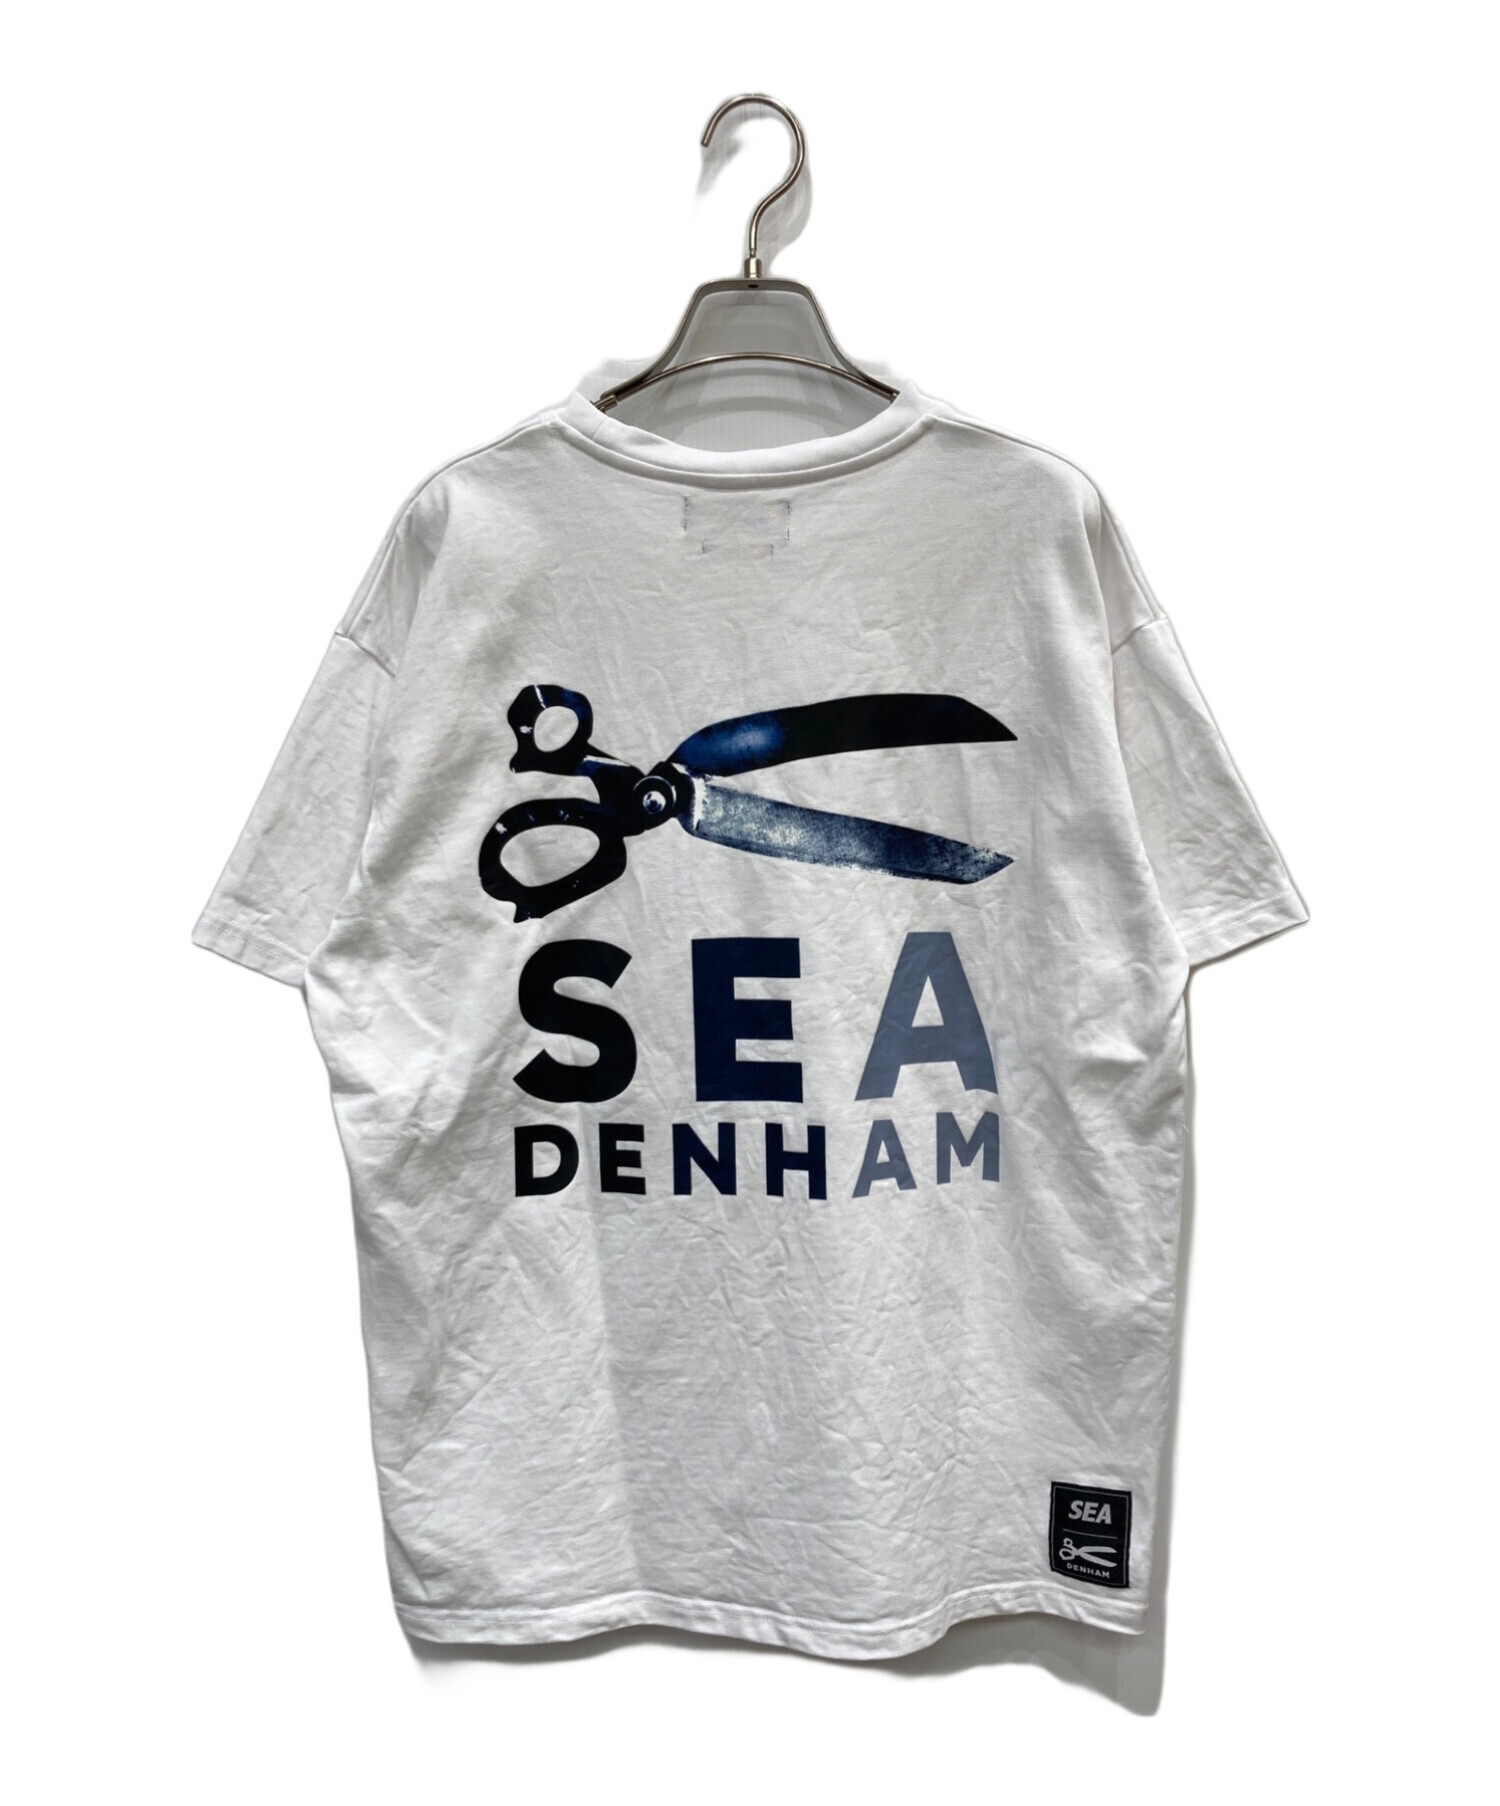 WIND AND SEA (ウィンダンシー) Denham (デンハム) Razor Tee ホワイト サイズ:S